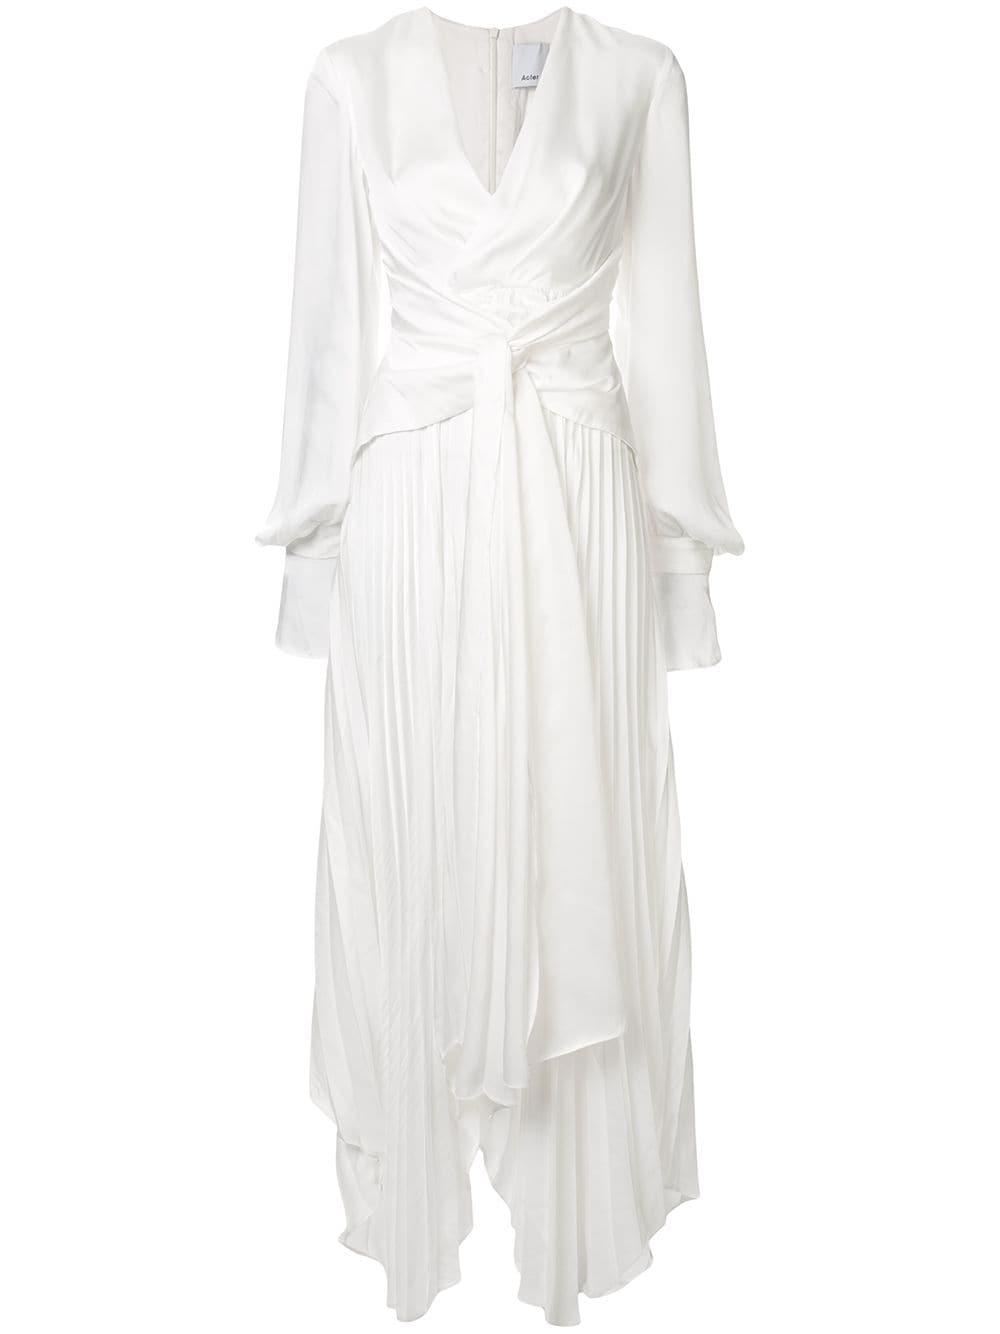 Acler Empire Asymmetric Hem Dress in White - Lyst